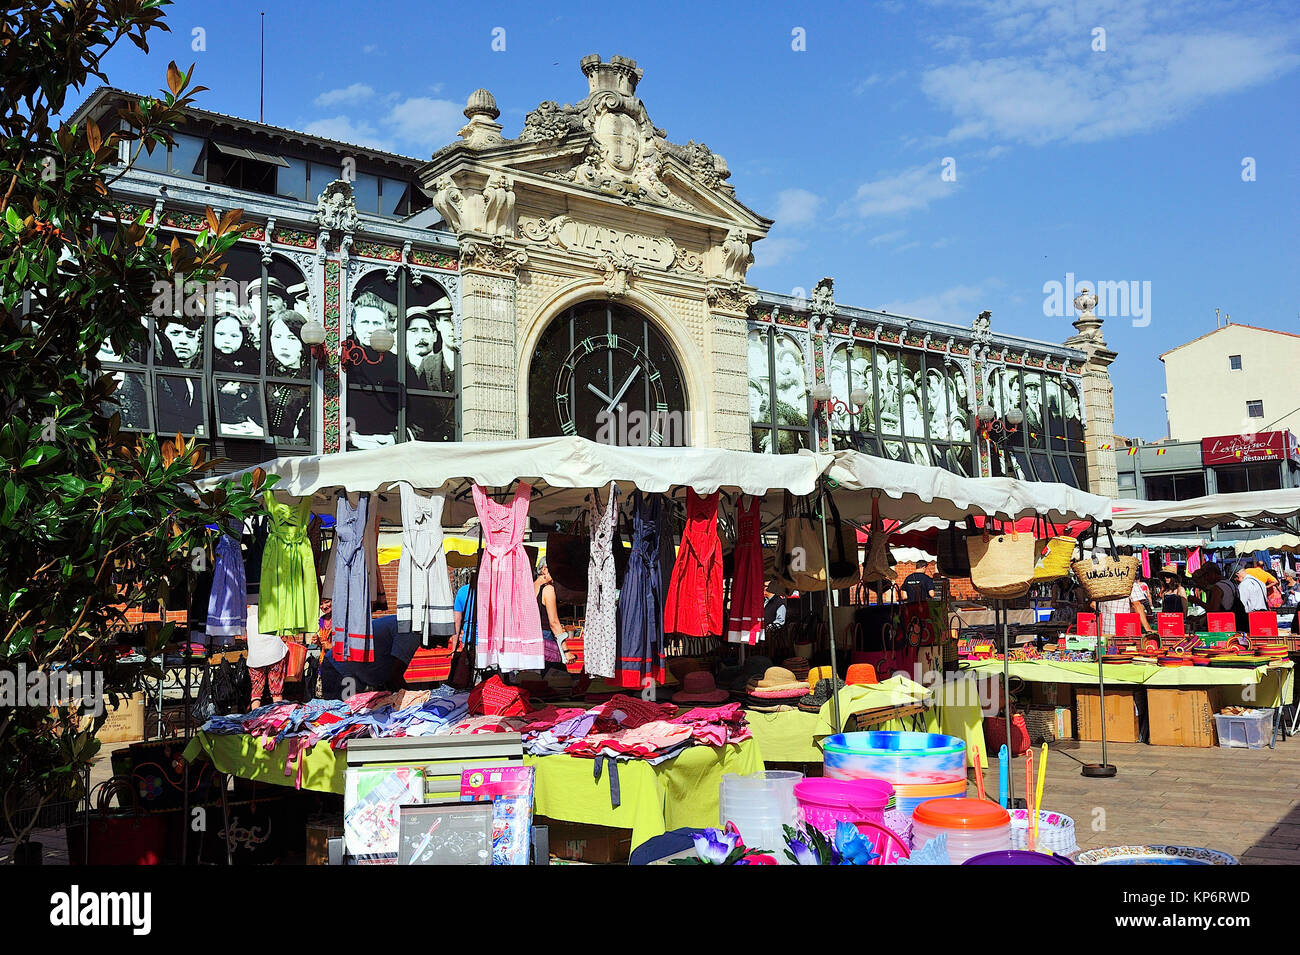 Street market in front Les Halles -indoor market-. Narbonne city